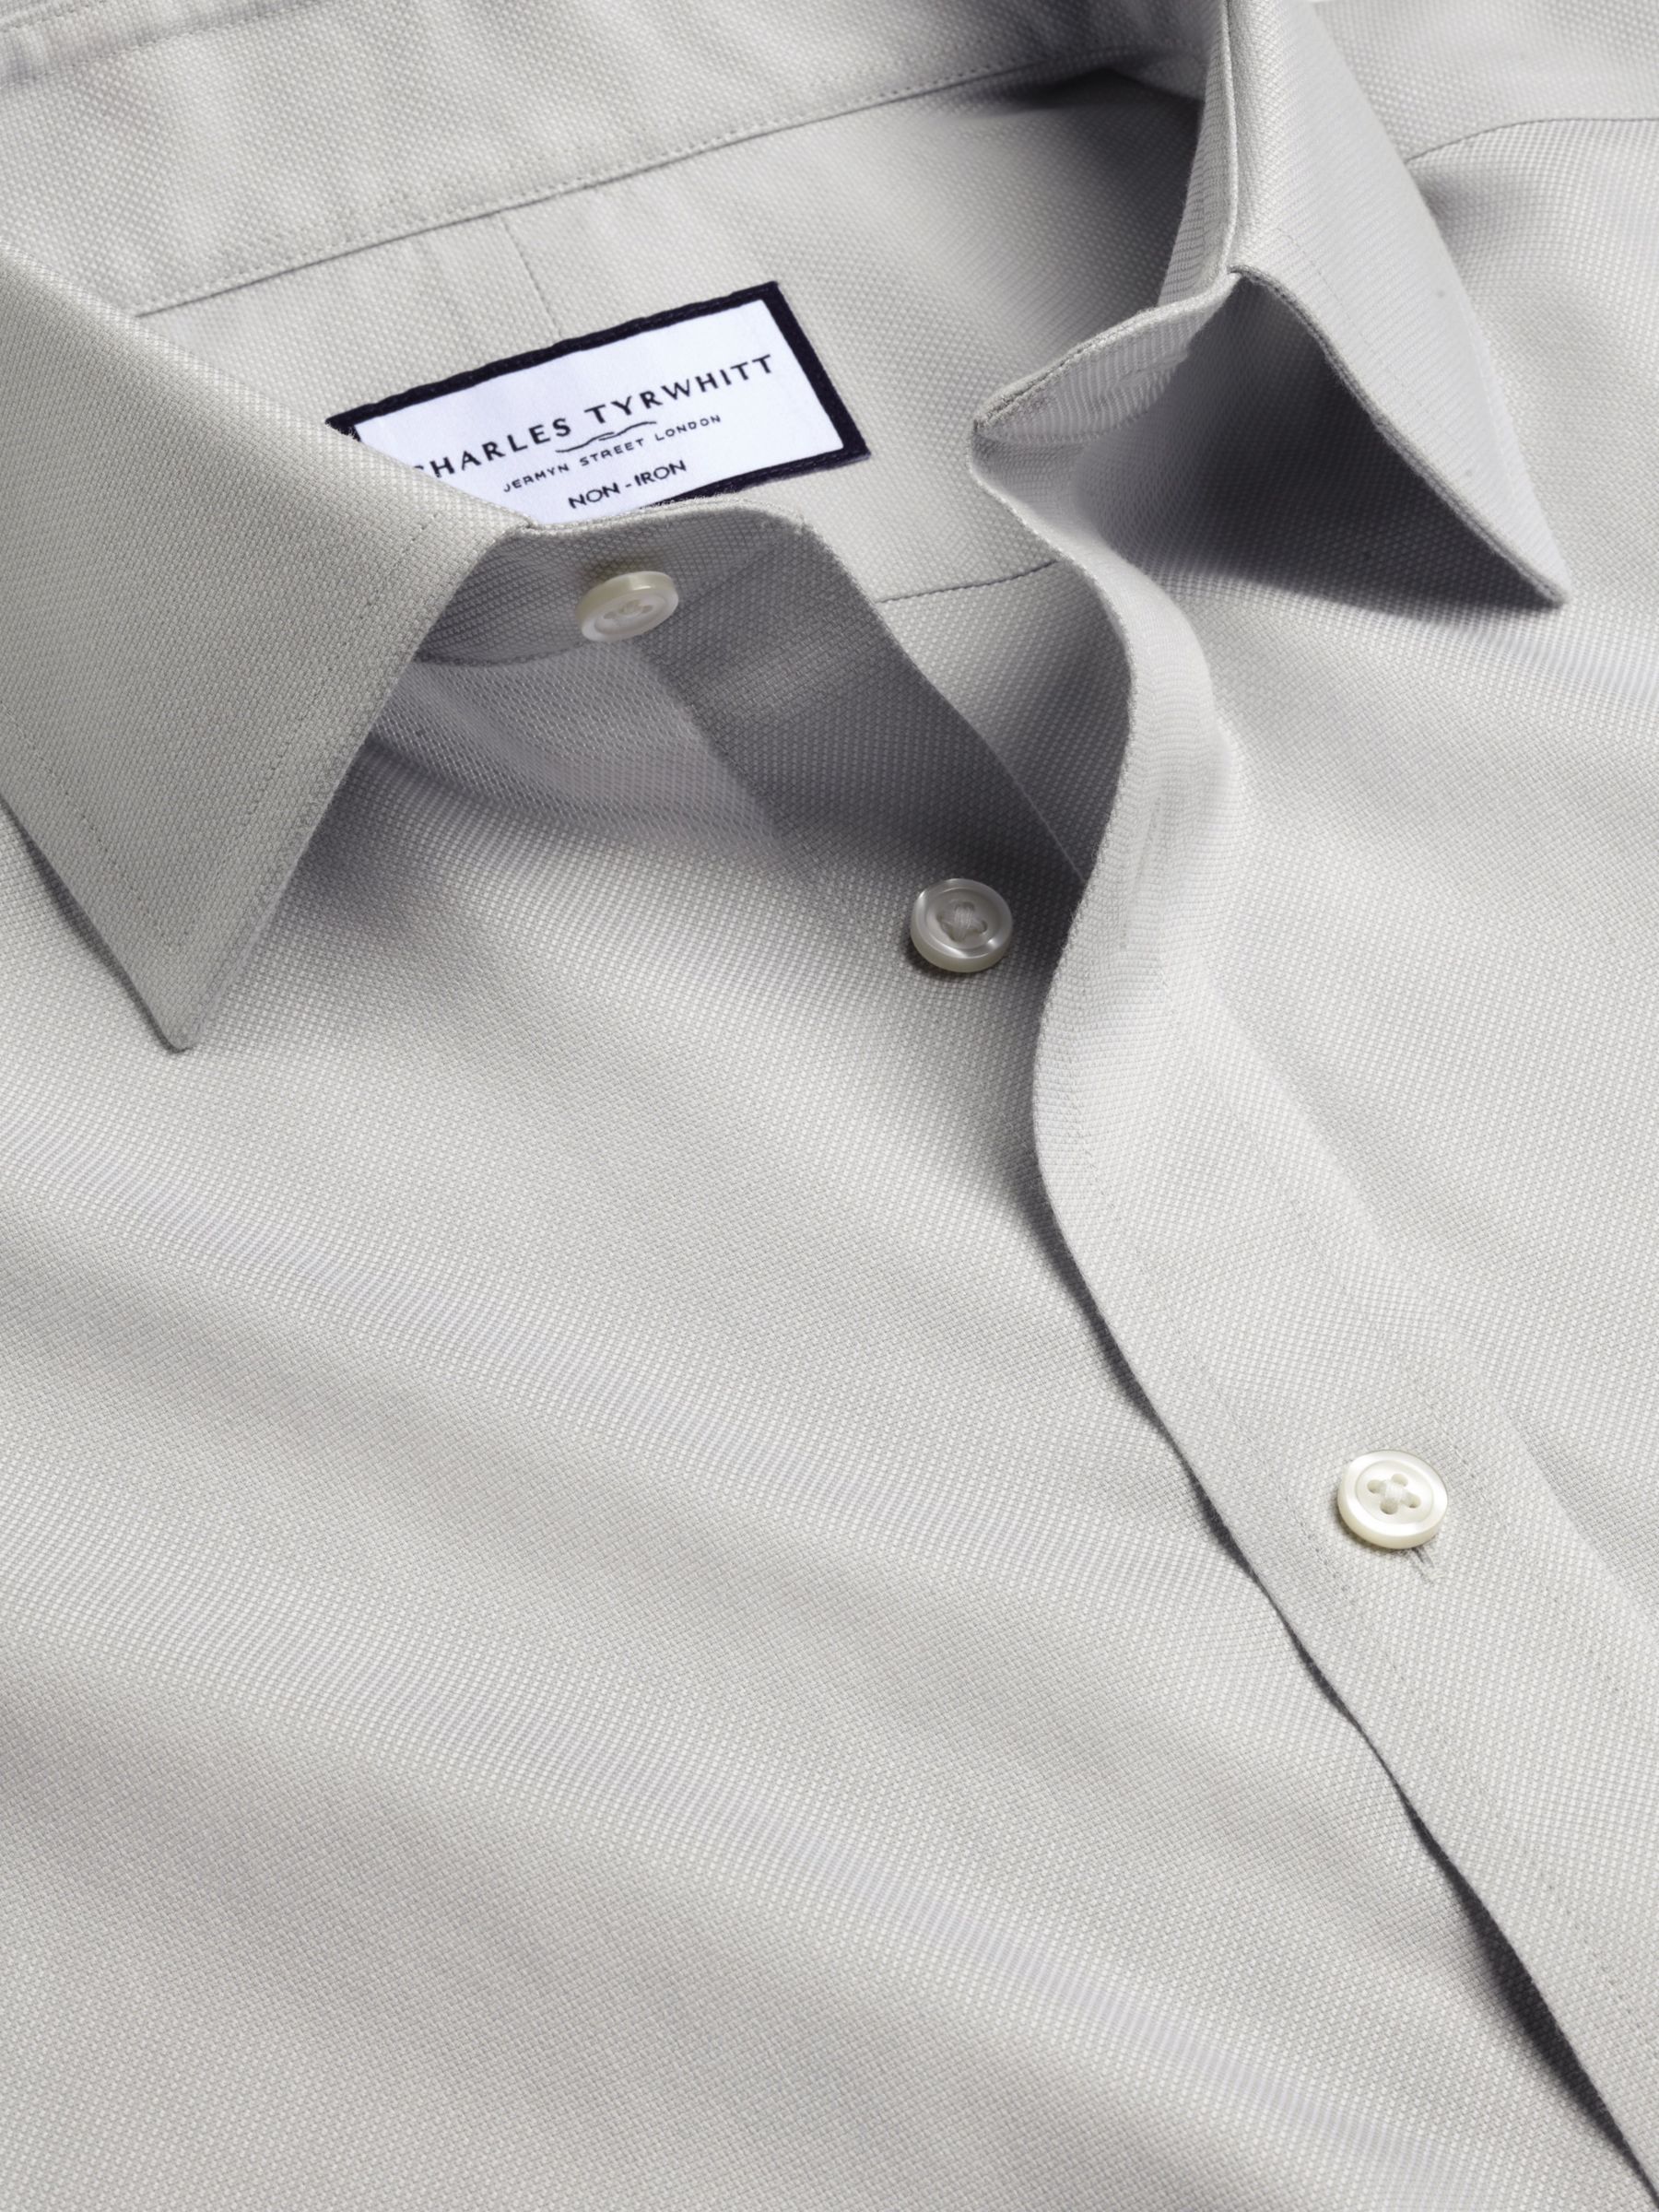 Charles Tyrwhitt Non-Iron Royal Oxford Shirt, Silver Grey, 15